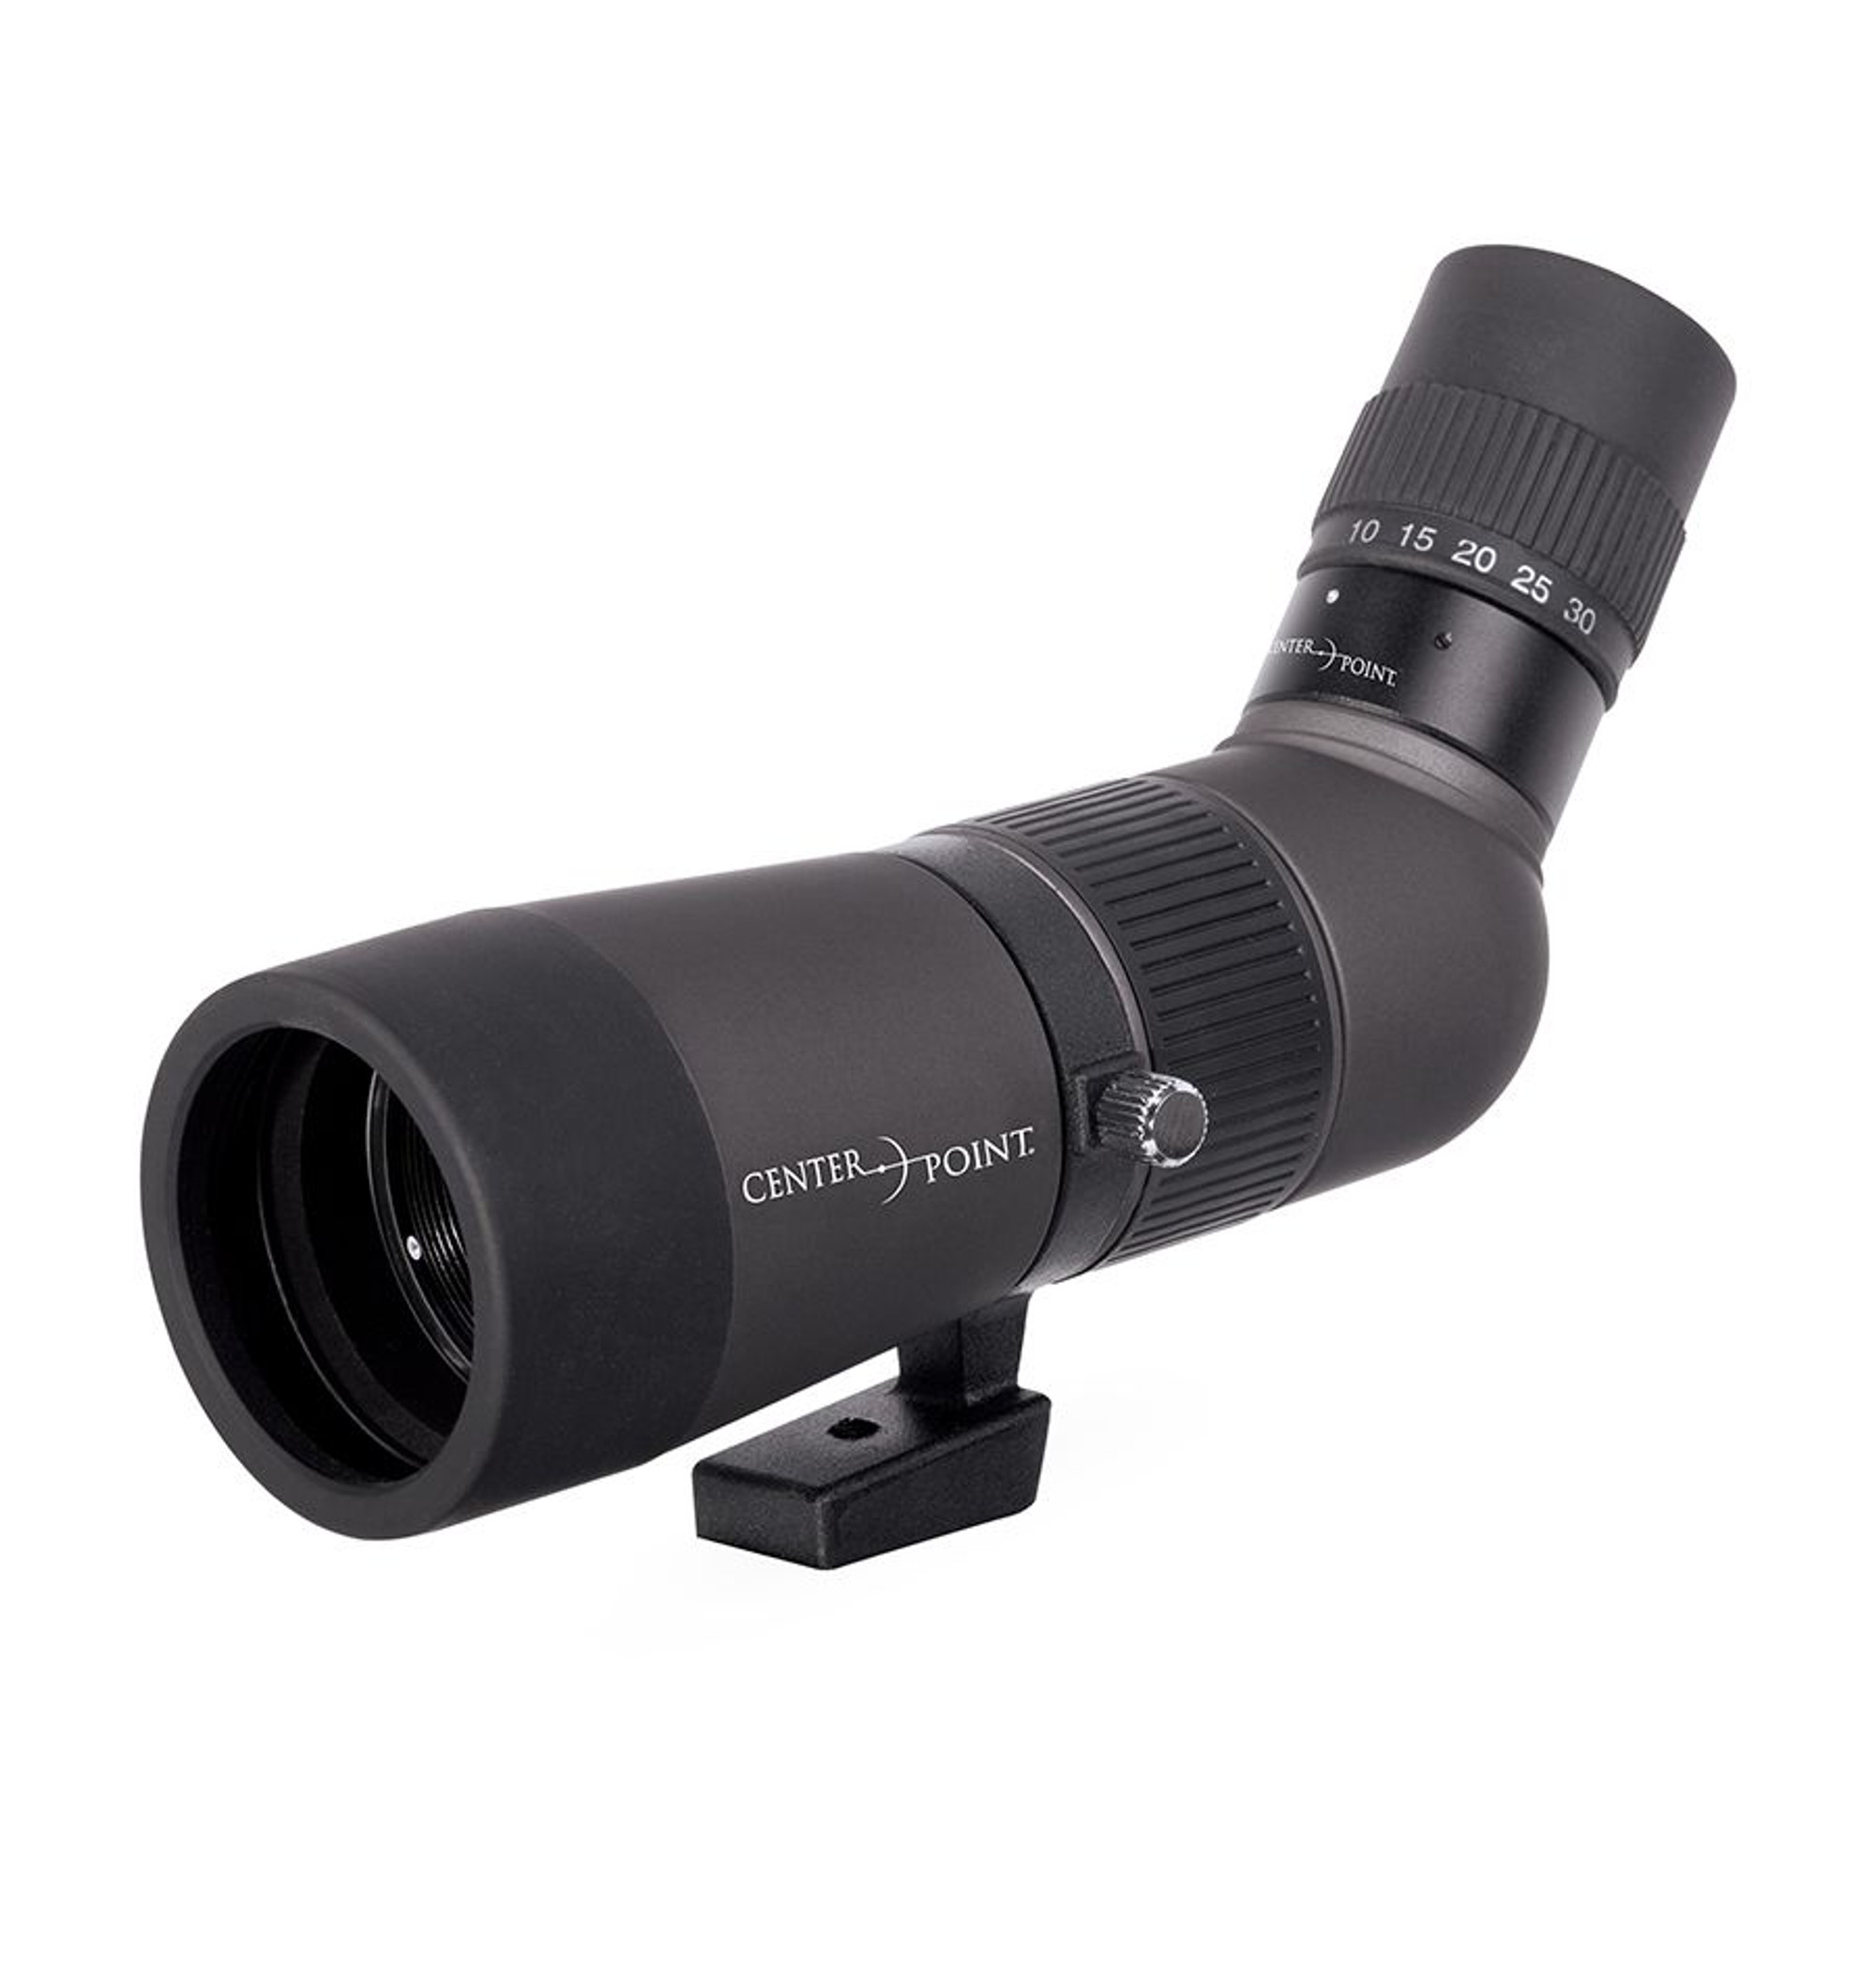 Centerpoint 10-20x50mm Spotting Scope - 45° eyepiece, w/Tabletop Tri-pod & Carry Case